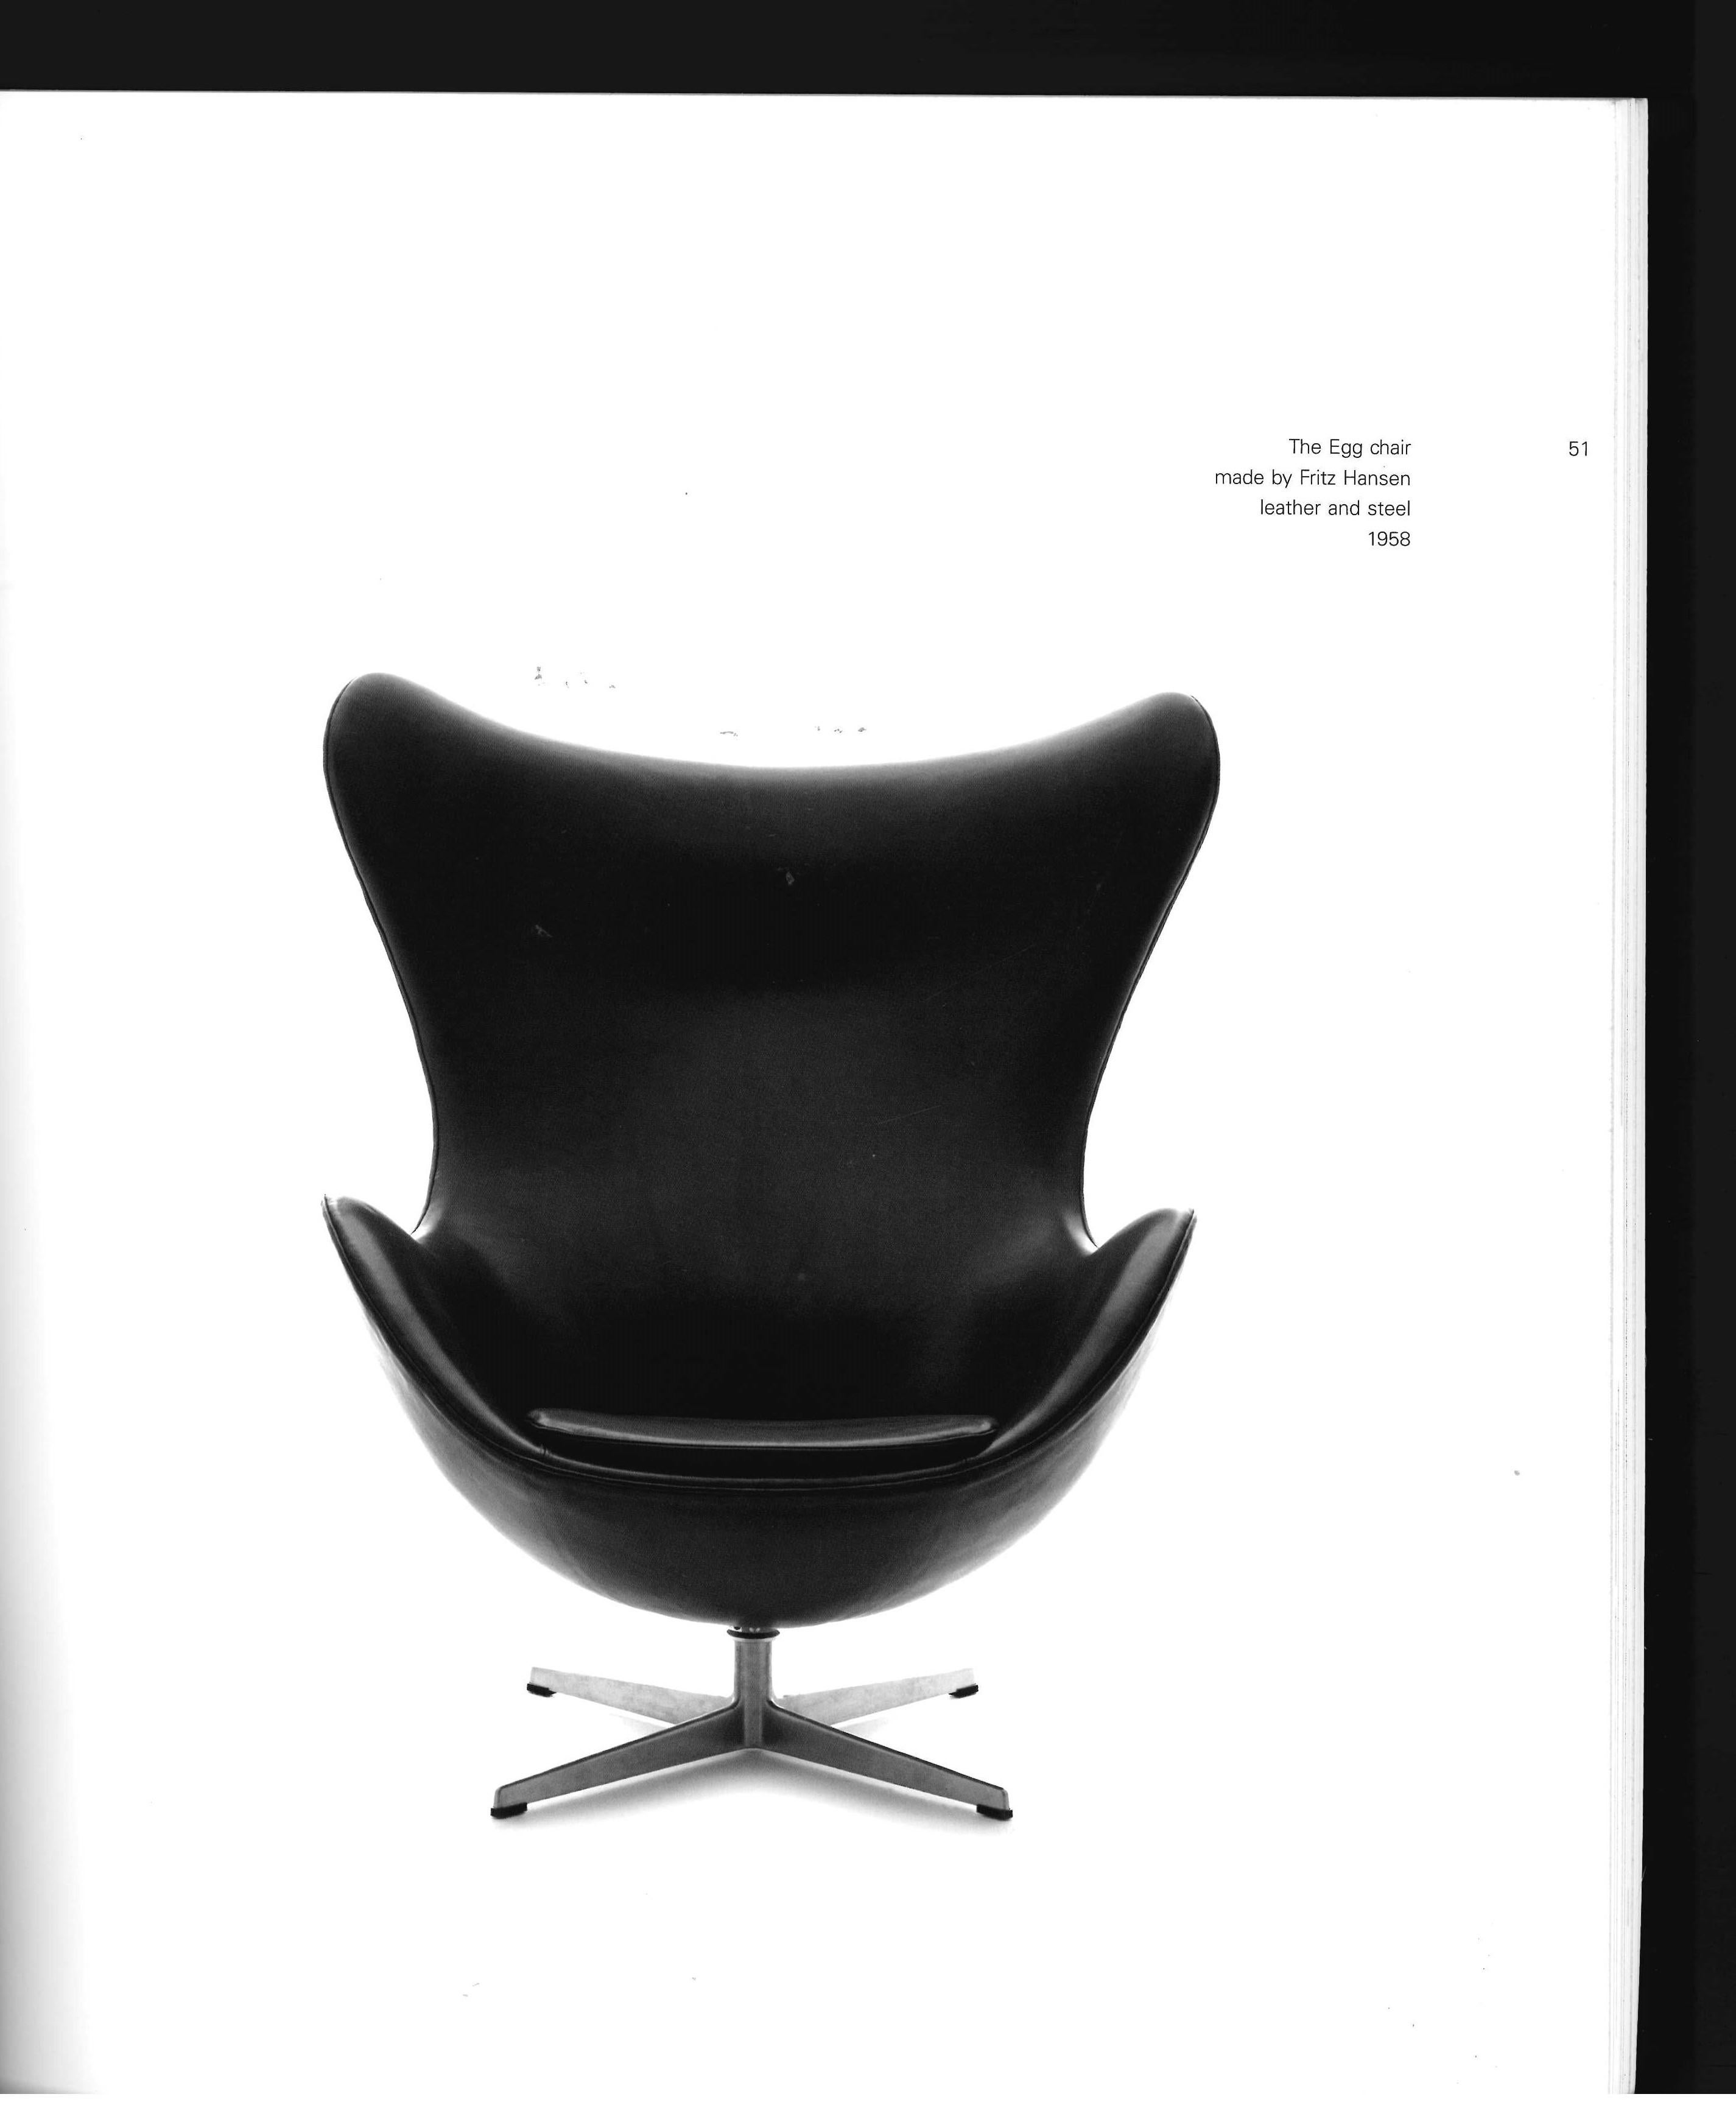 Paper Arne Jacobsen Furniture Designs, Book